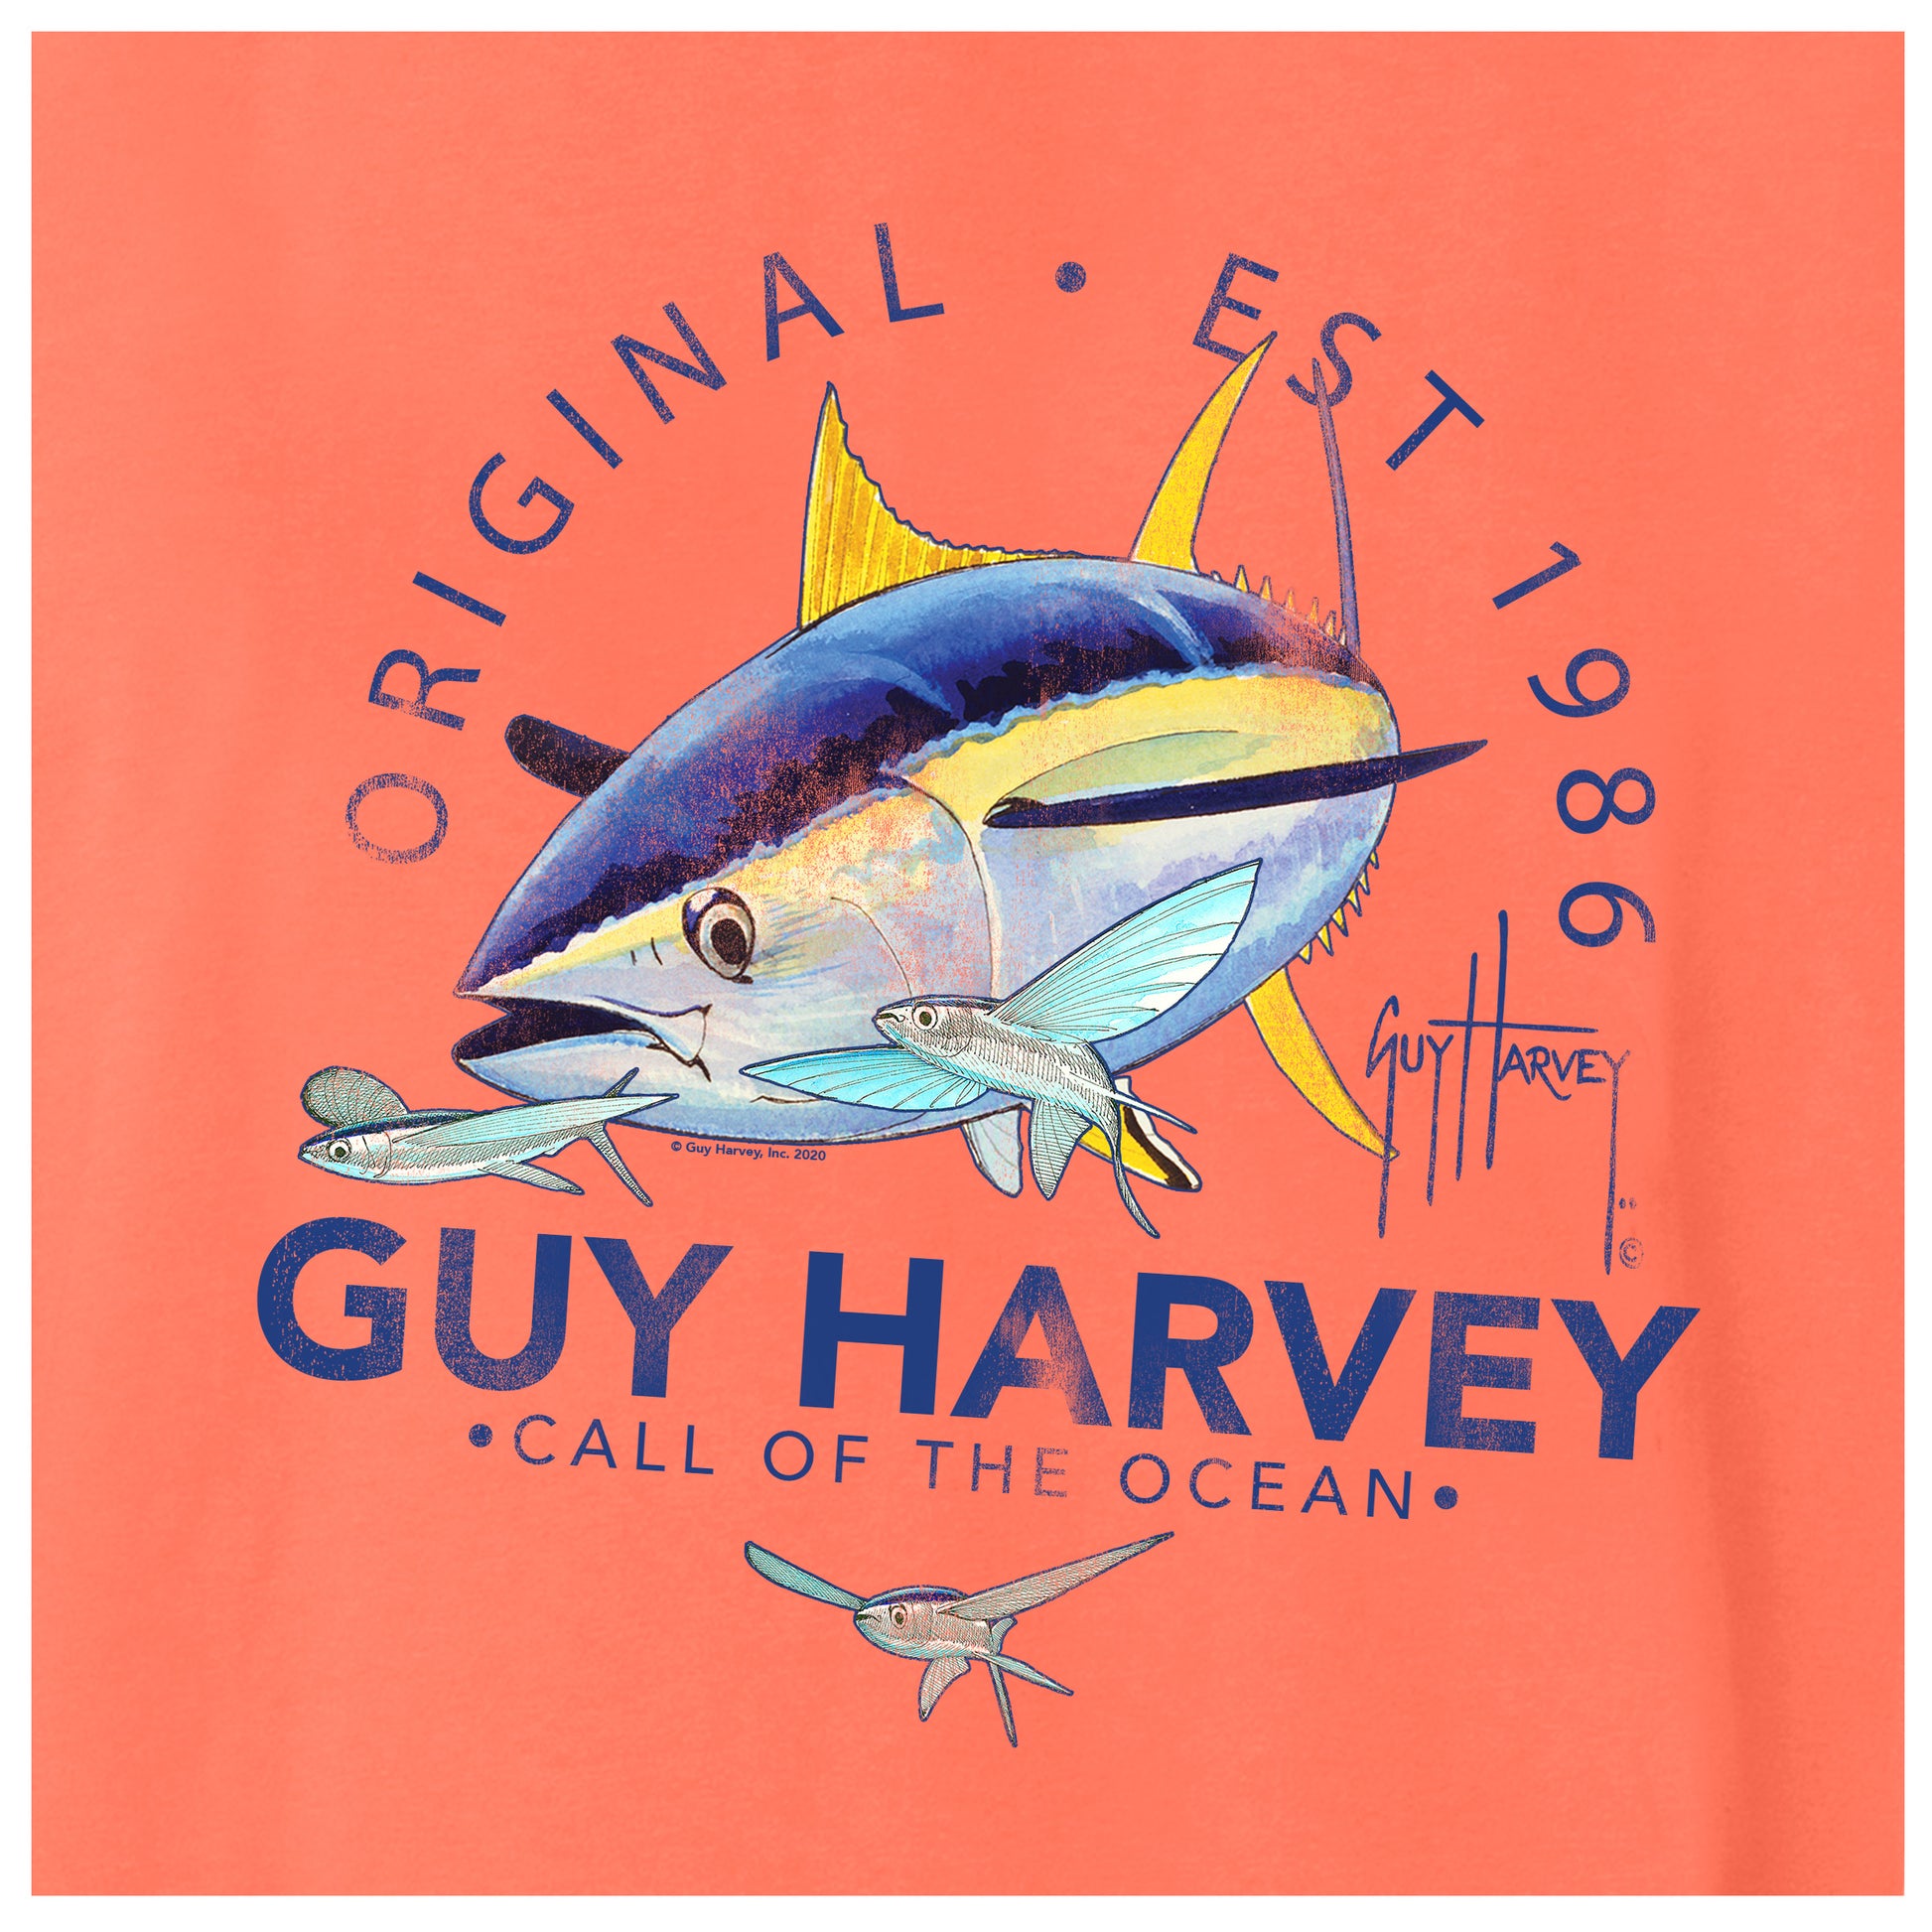 The Tropical Marlin - Performance Fishing T-Shirt